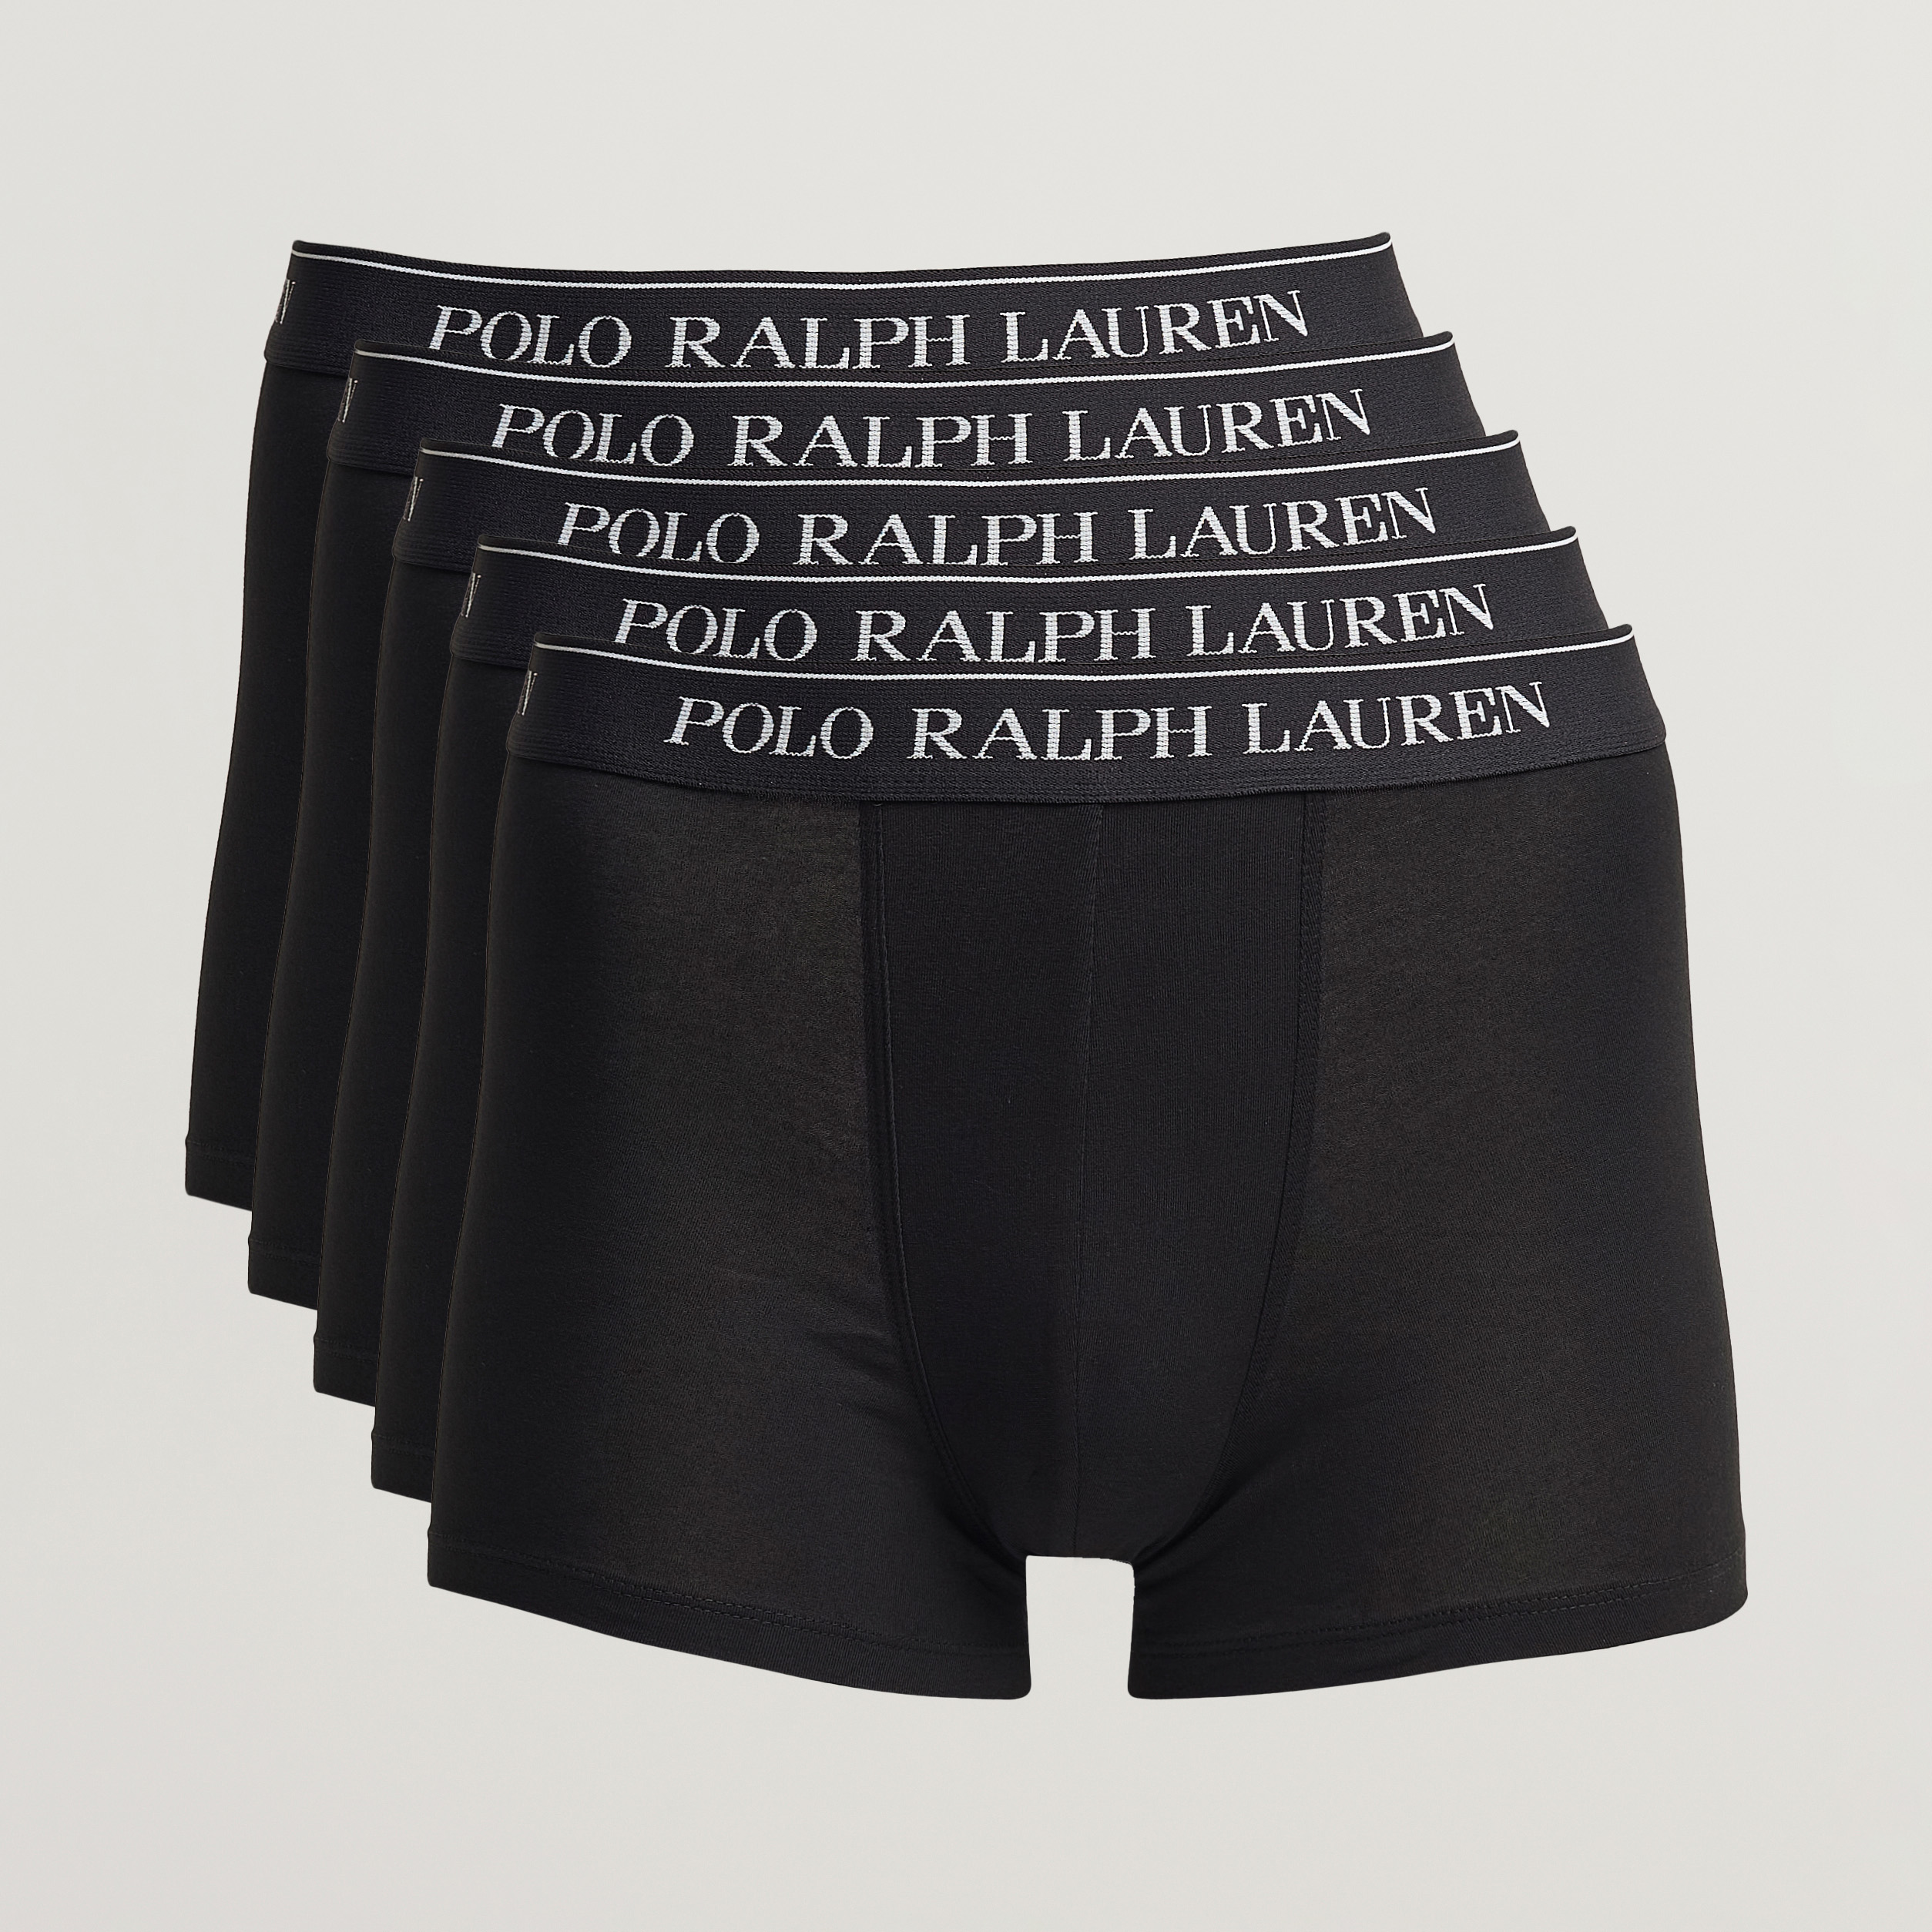 Polo Ralph Lauren 5-Pack Trunk Black at